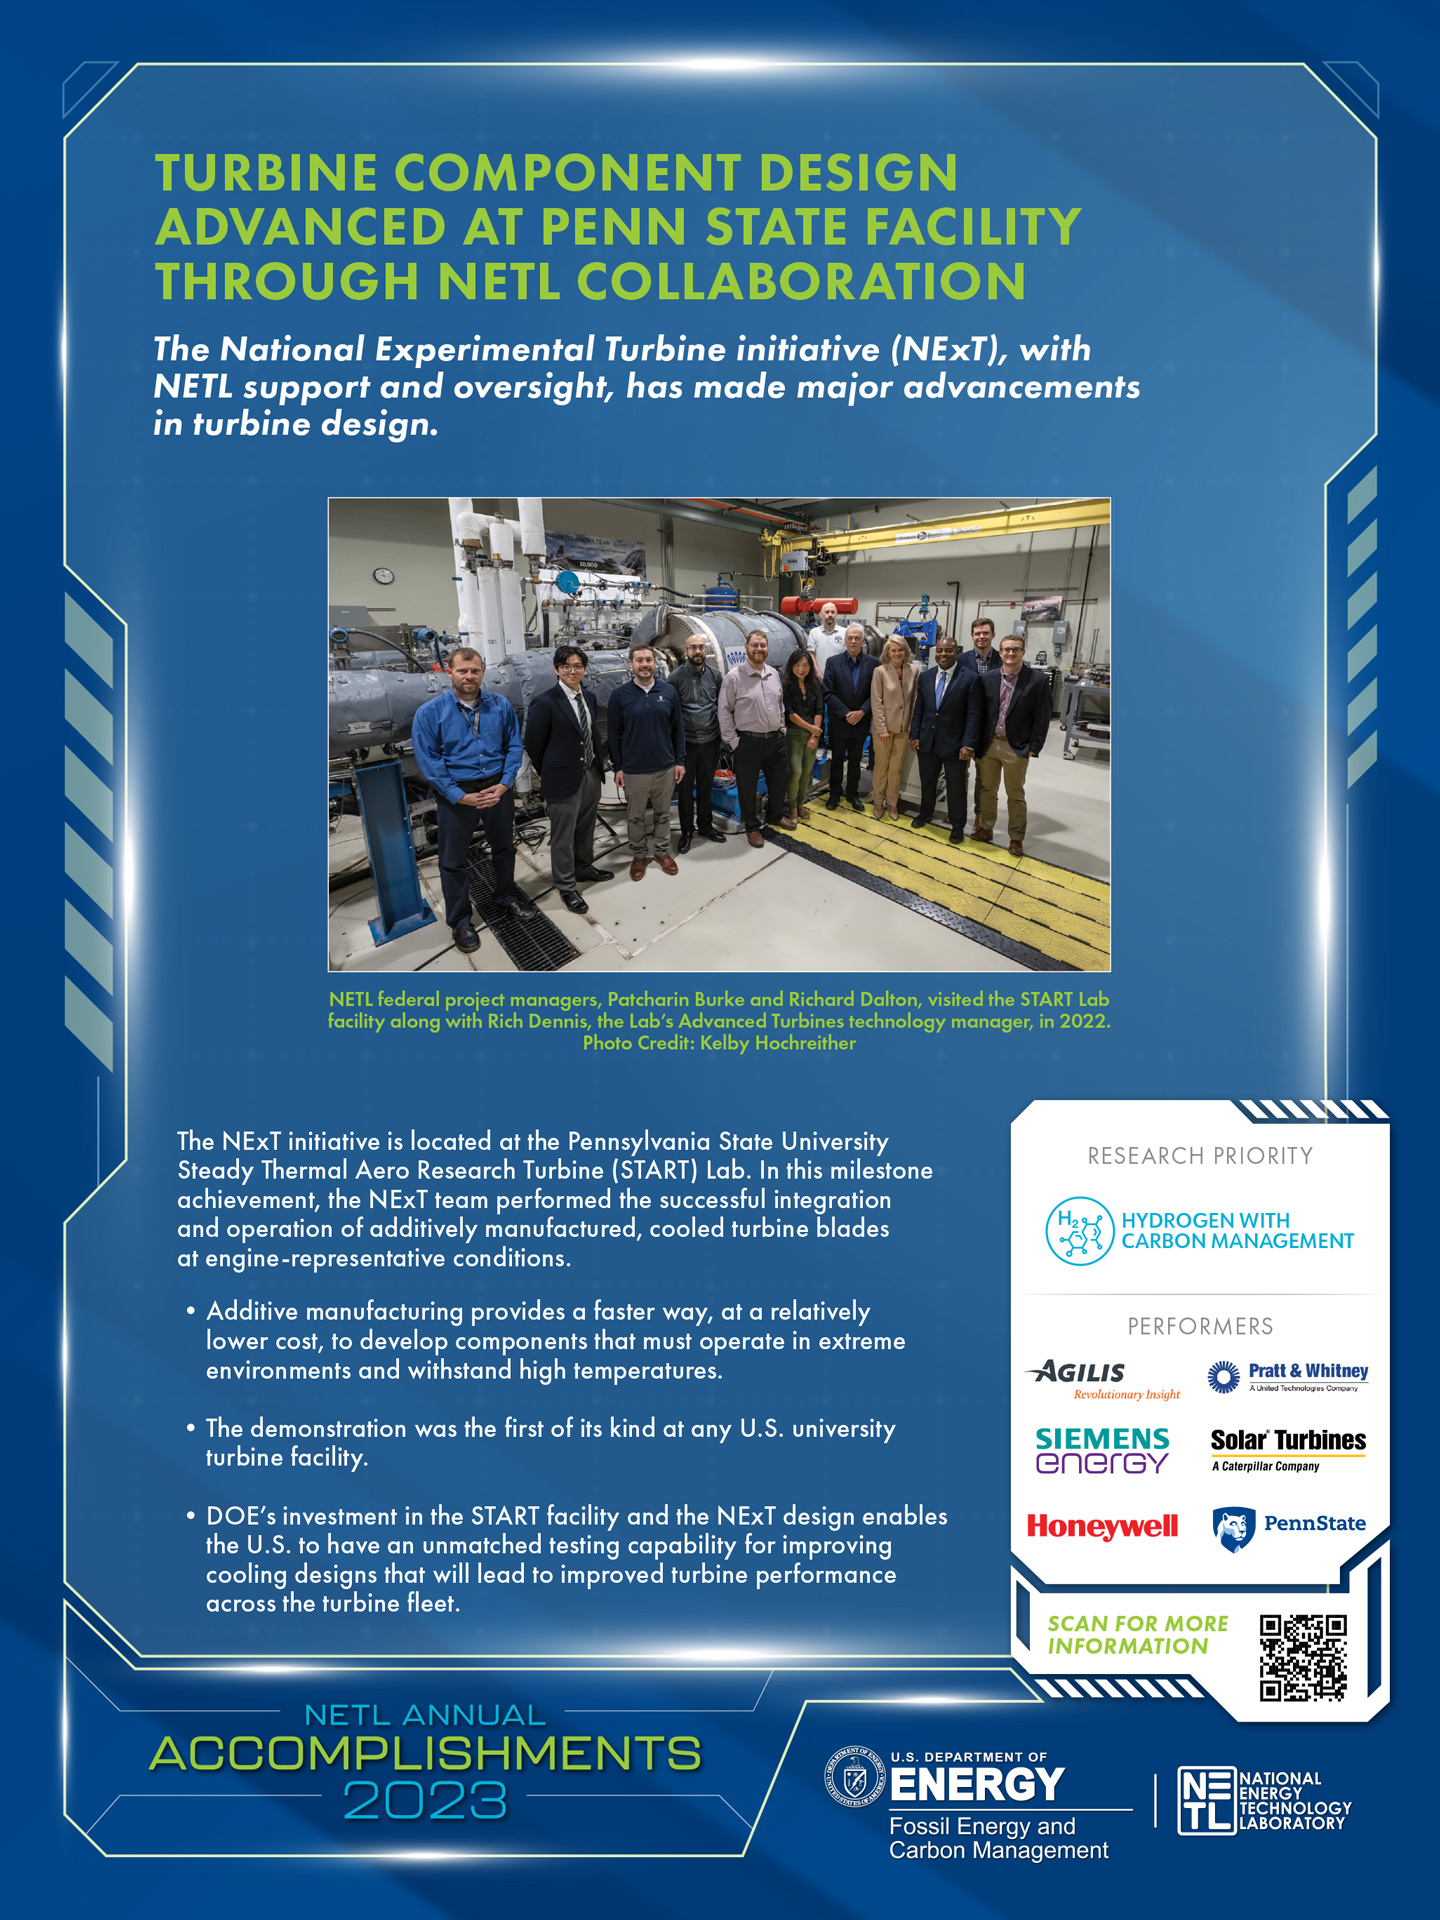 Turbine Component Design Advanced at Penn State Facility Through NETL Collaboration